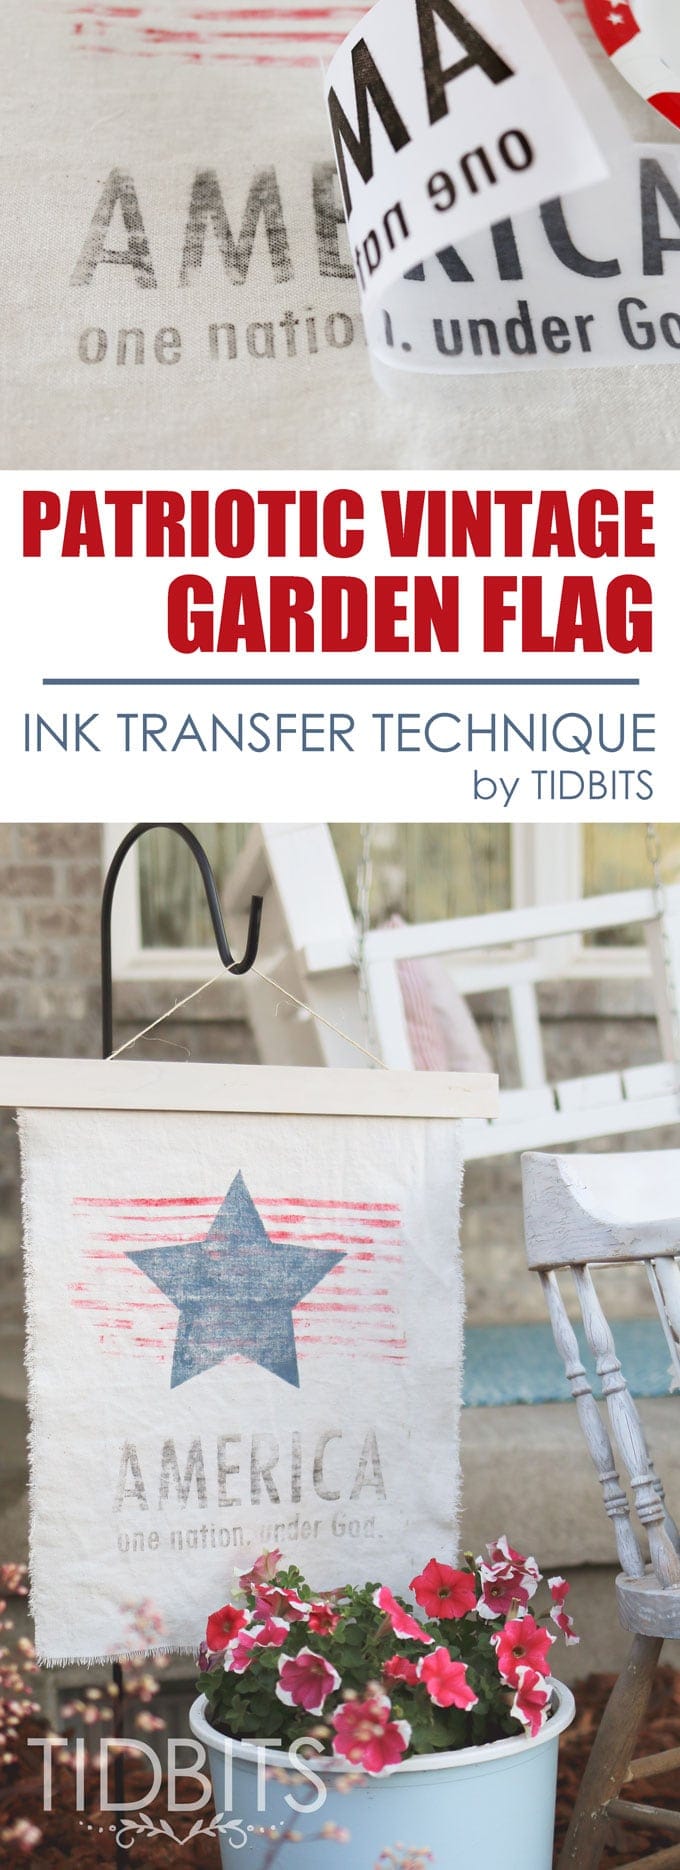 Patriotic Vintage Garden Flag tutorial, featuring a ink transfer technique.